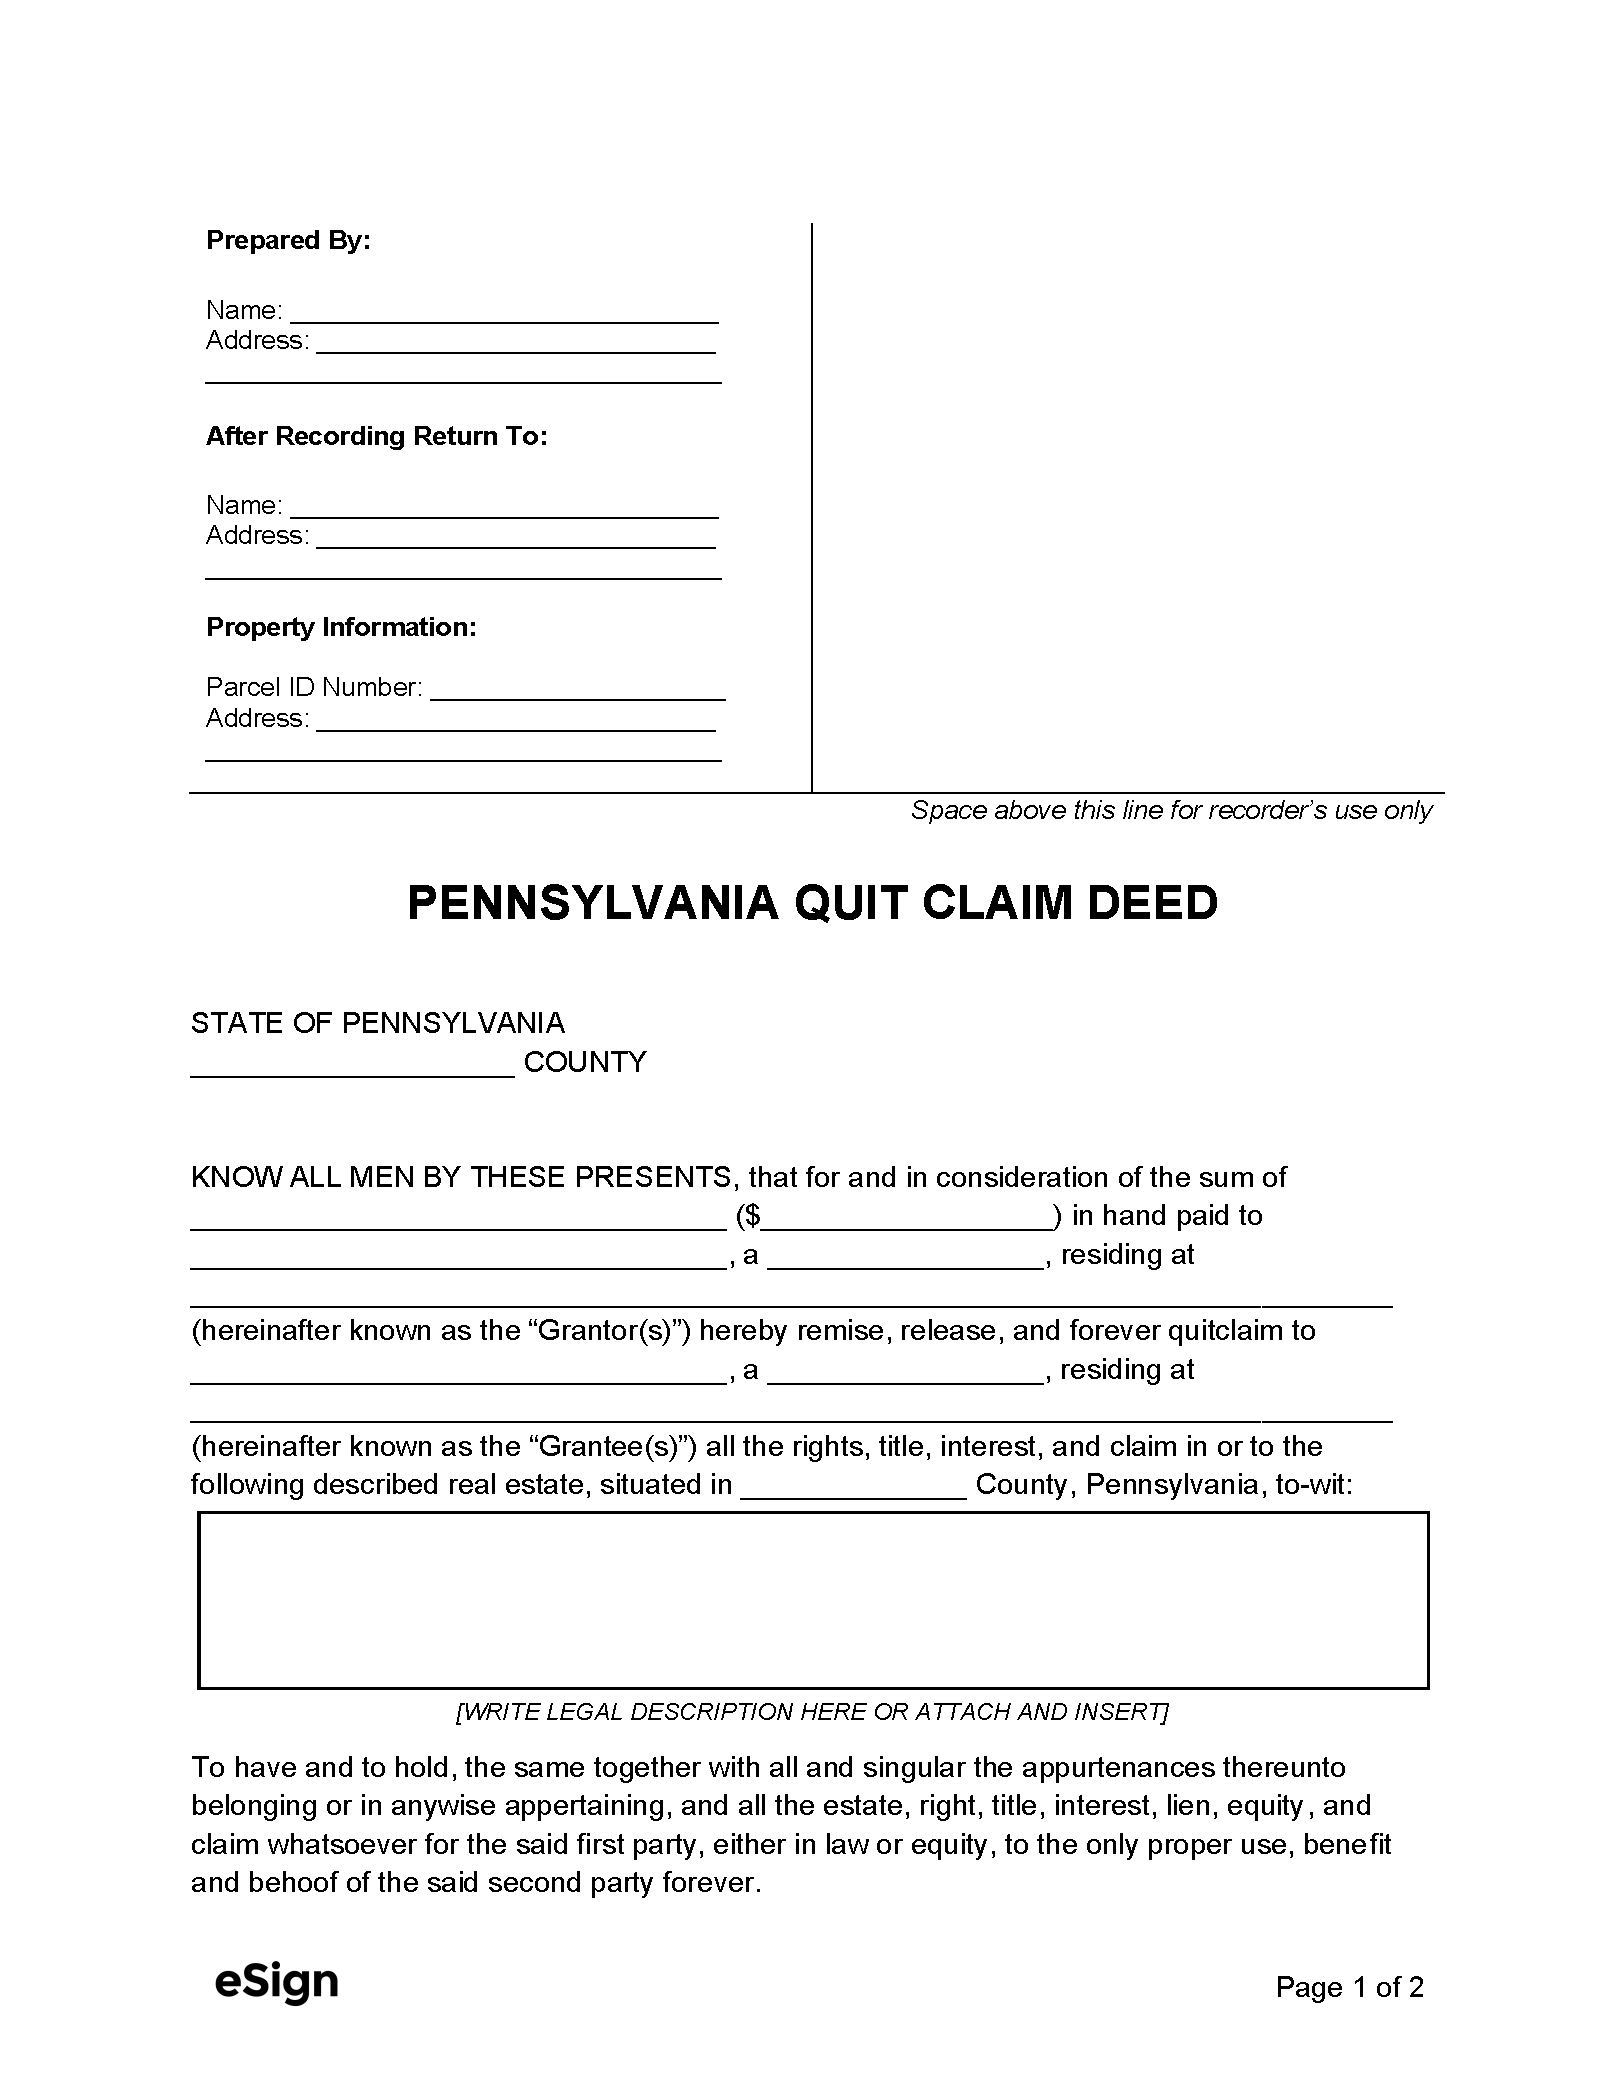 free-pennsylvania-deed-forms